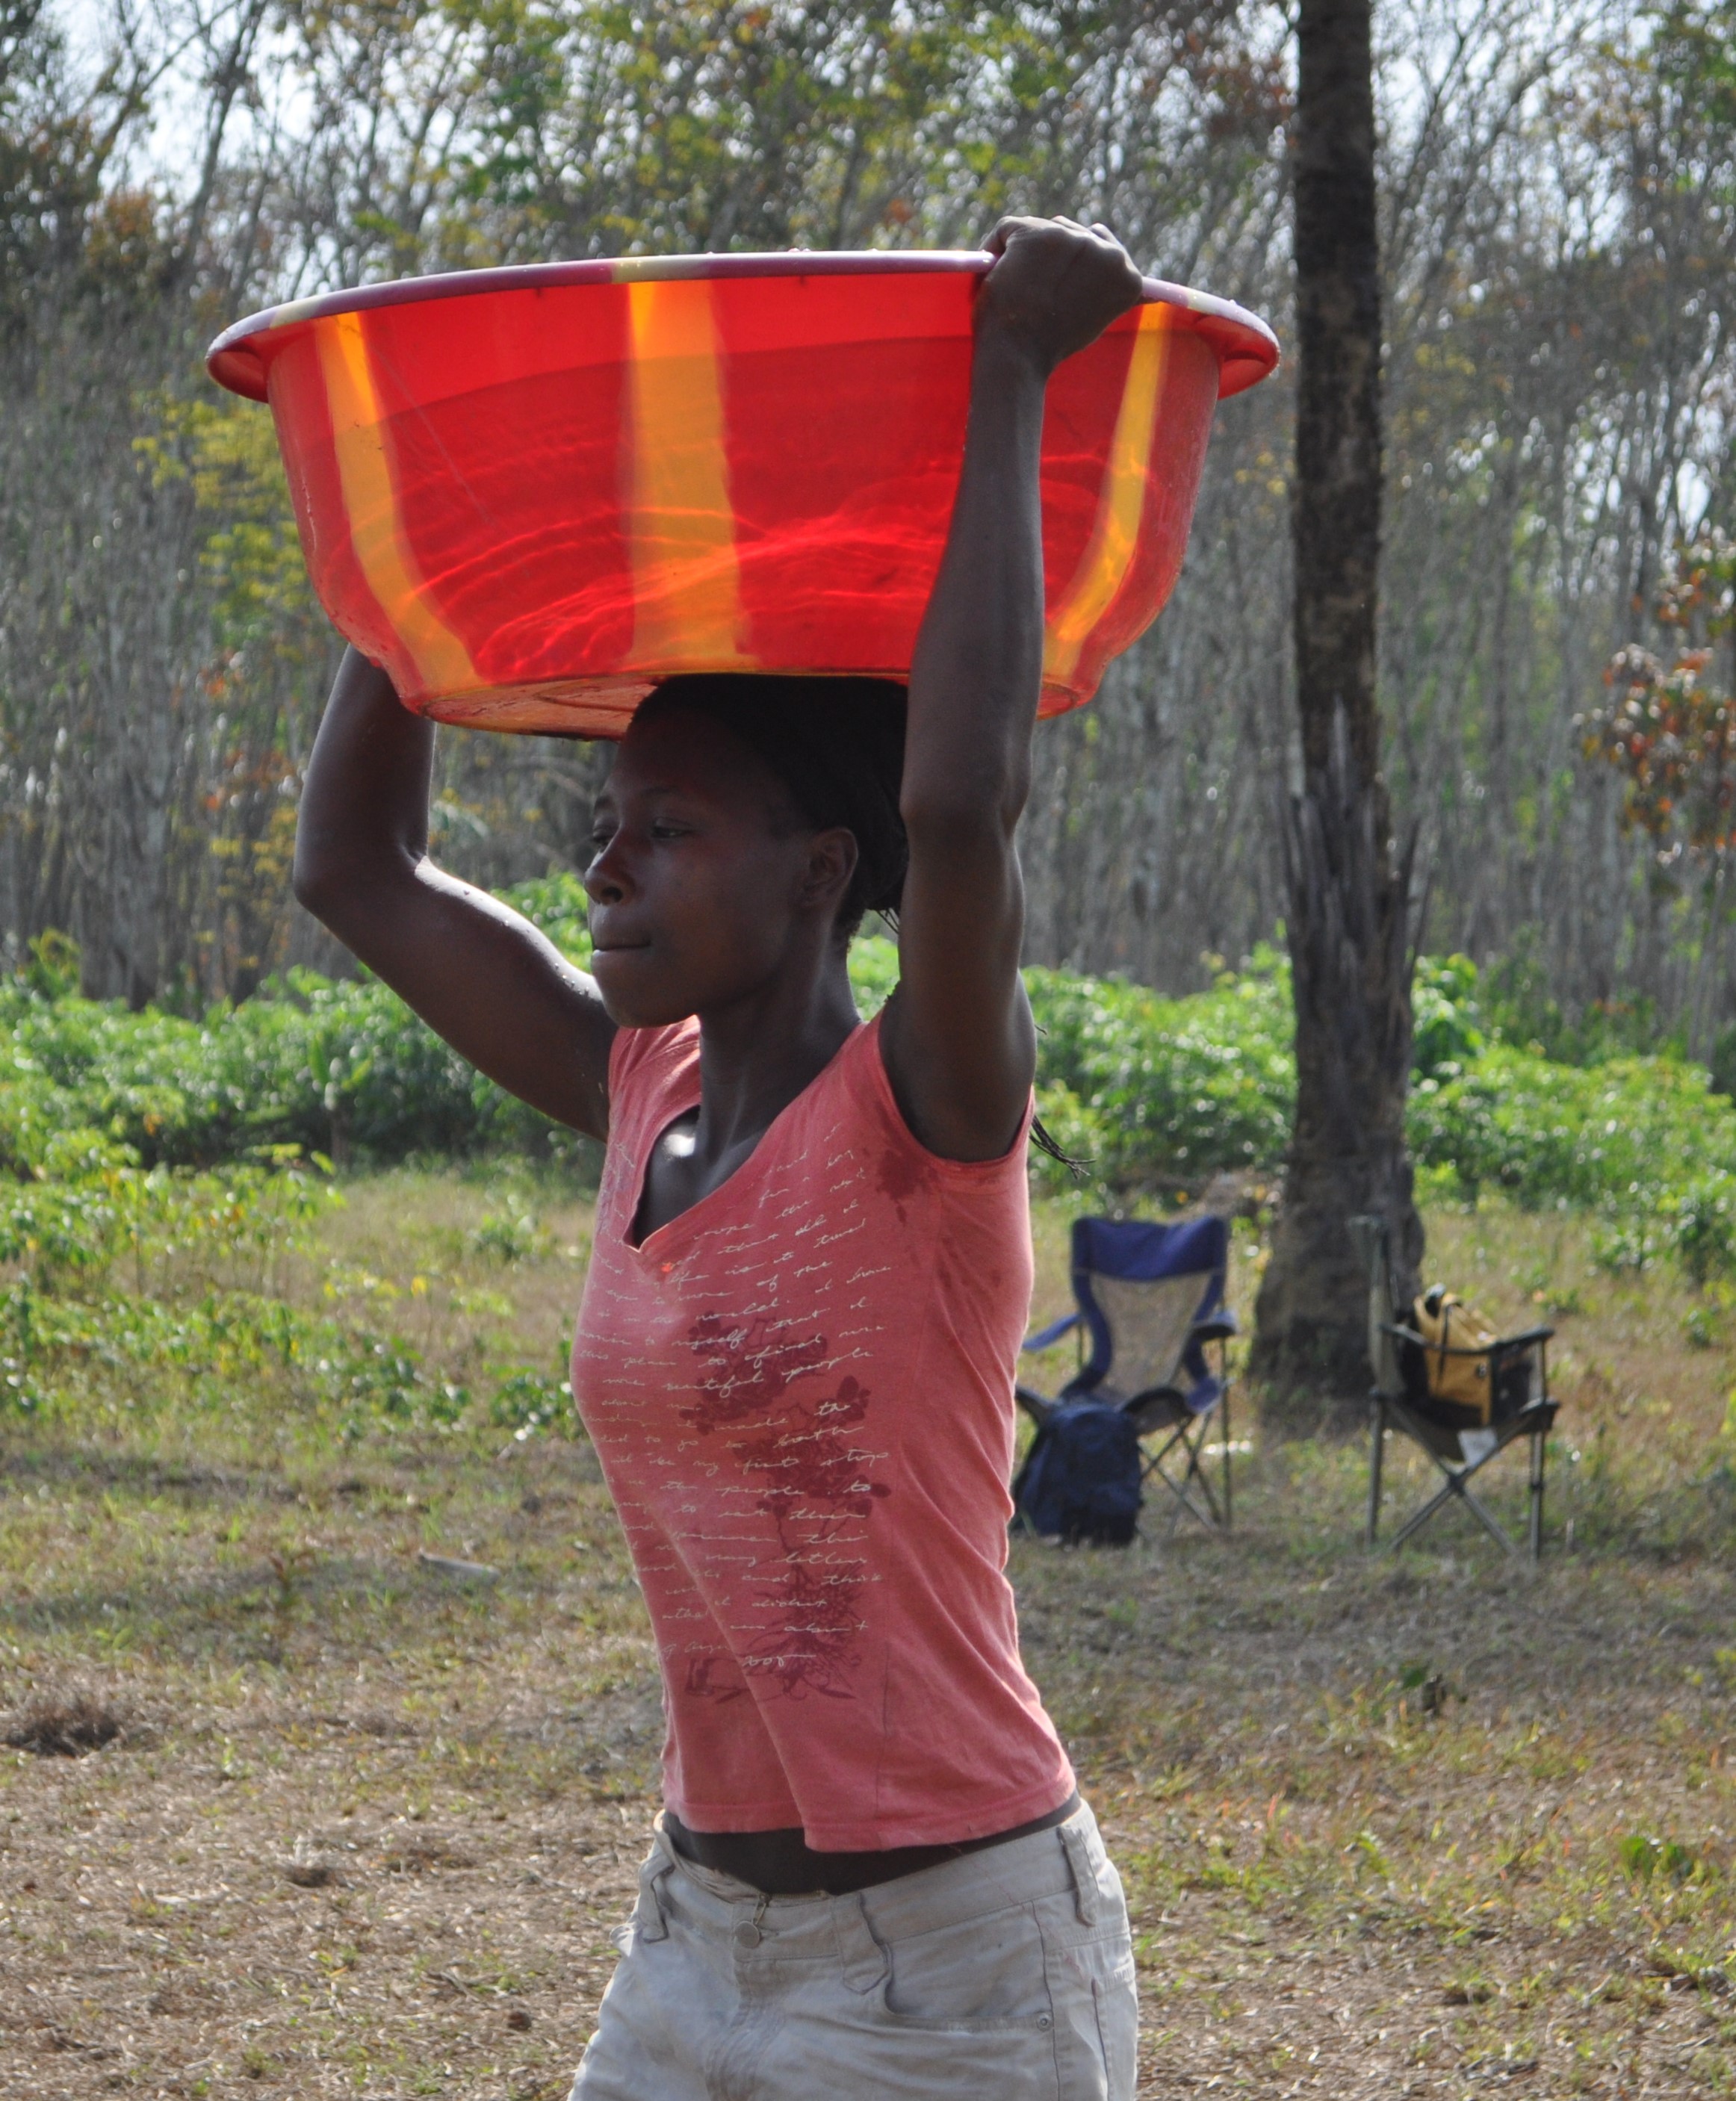 Photos - Women Carrying Water 1.jpg 1 MB